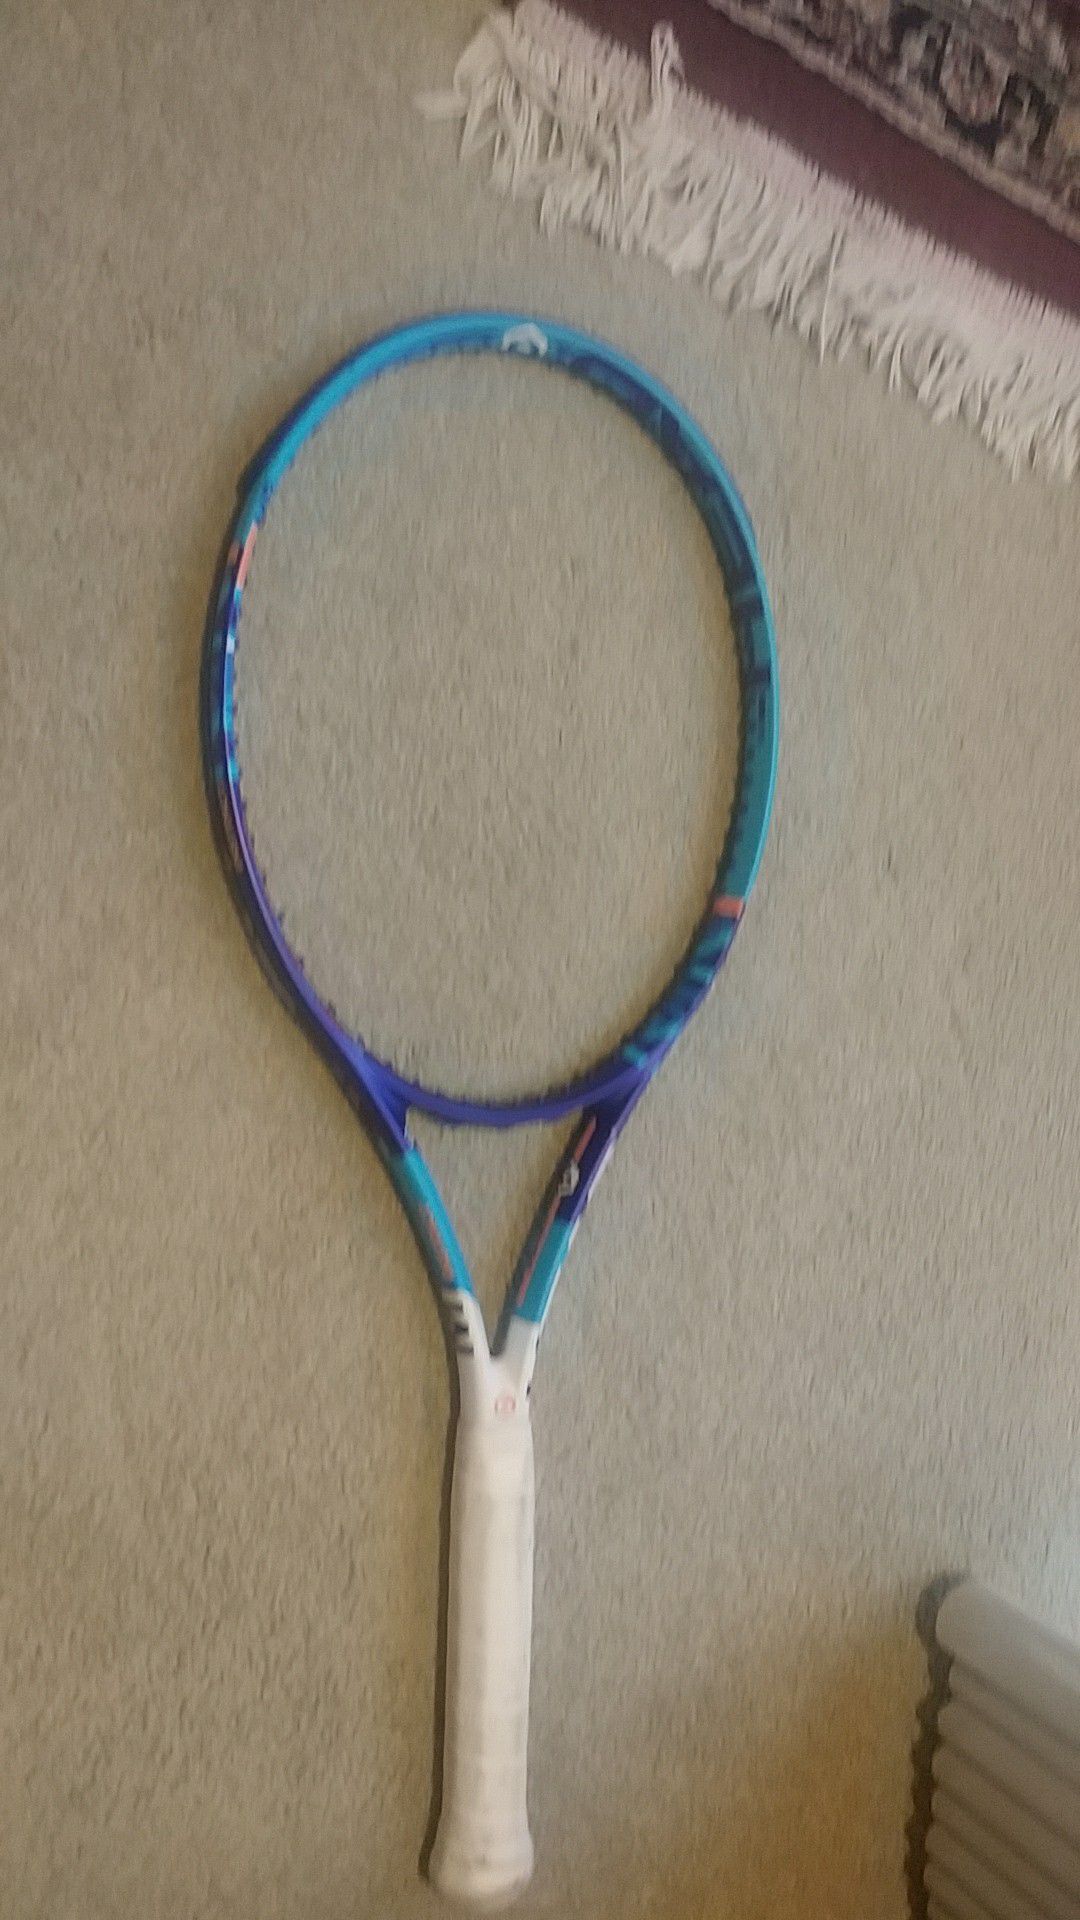 New unstrung Head Instinct MP tennis racket